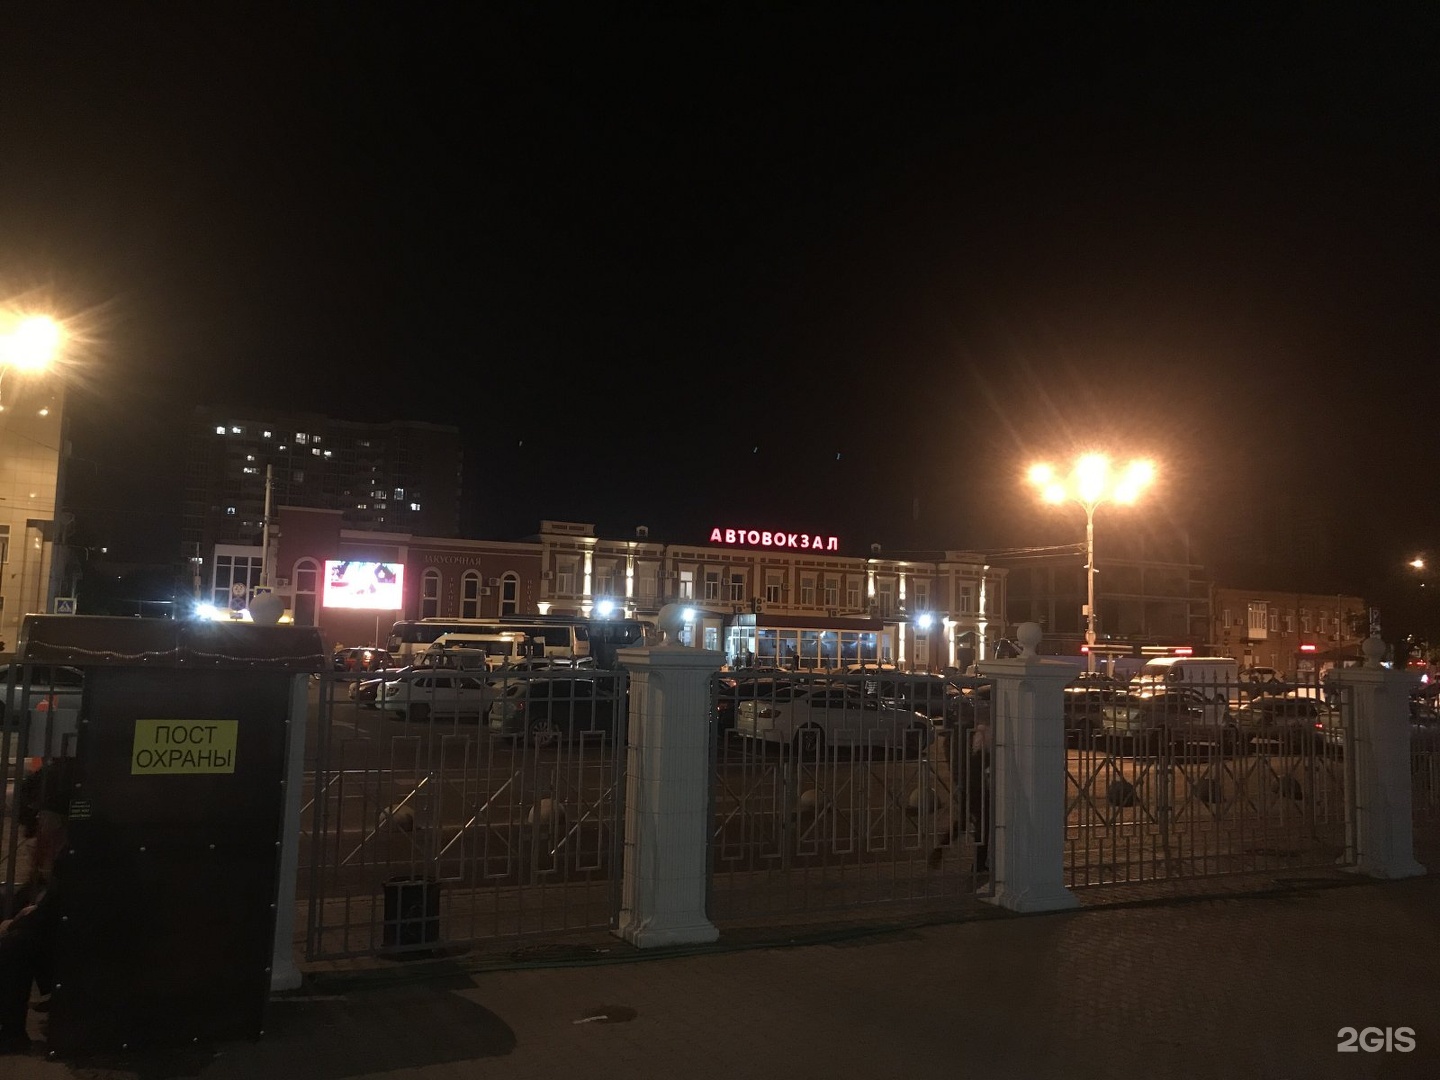 Автовокзал краснодар привокзальная. Привокзальная площадь 5 Краснодар. Краснодар Привокзальная площадь 5 Краснодарский автовокзал. Автовокзал Краснодар фото. Автовокзал Краснодар-1 достопримечательности.